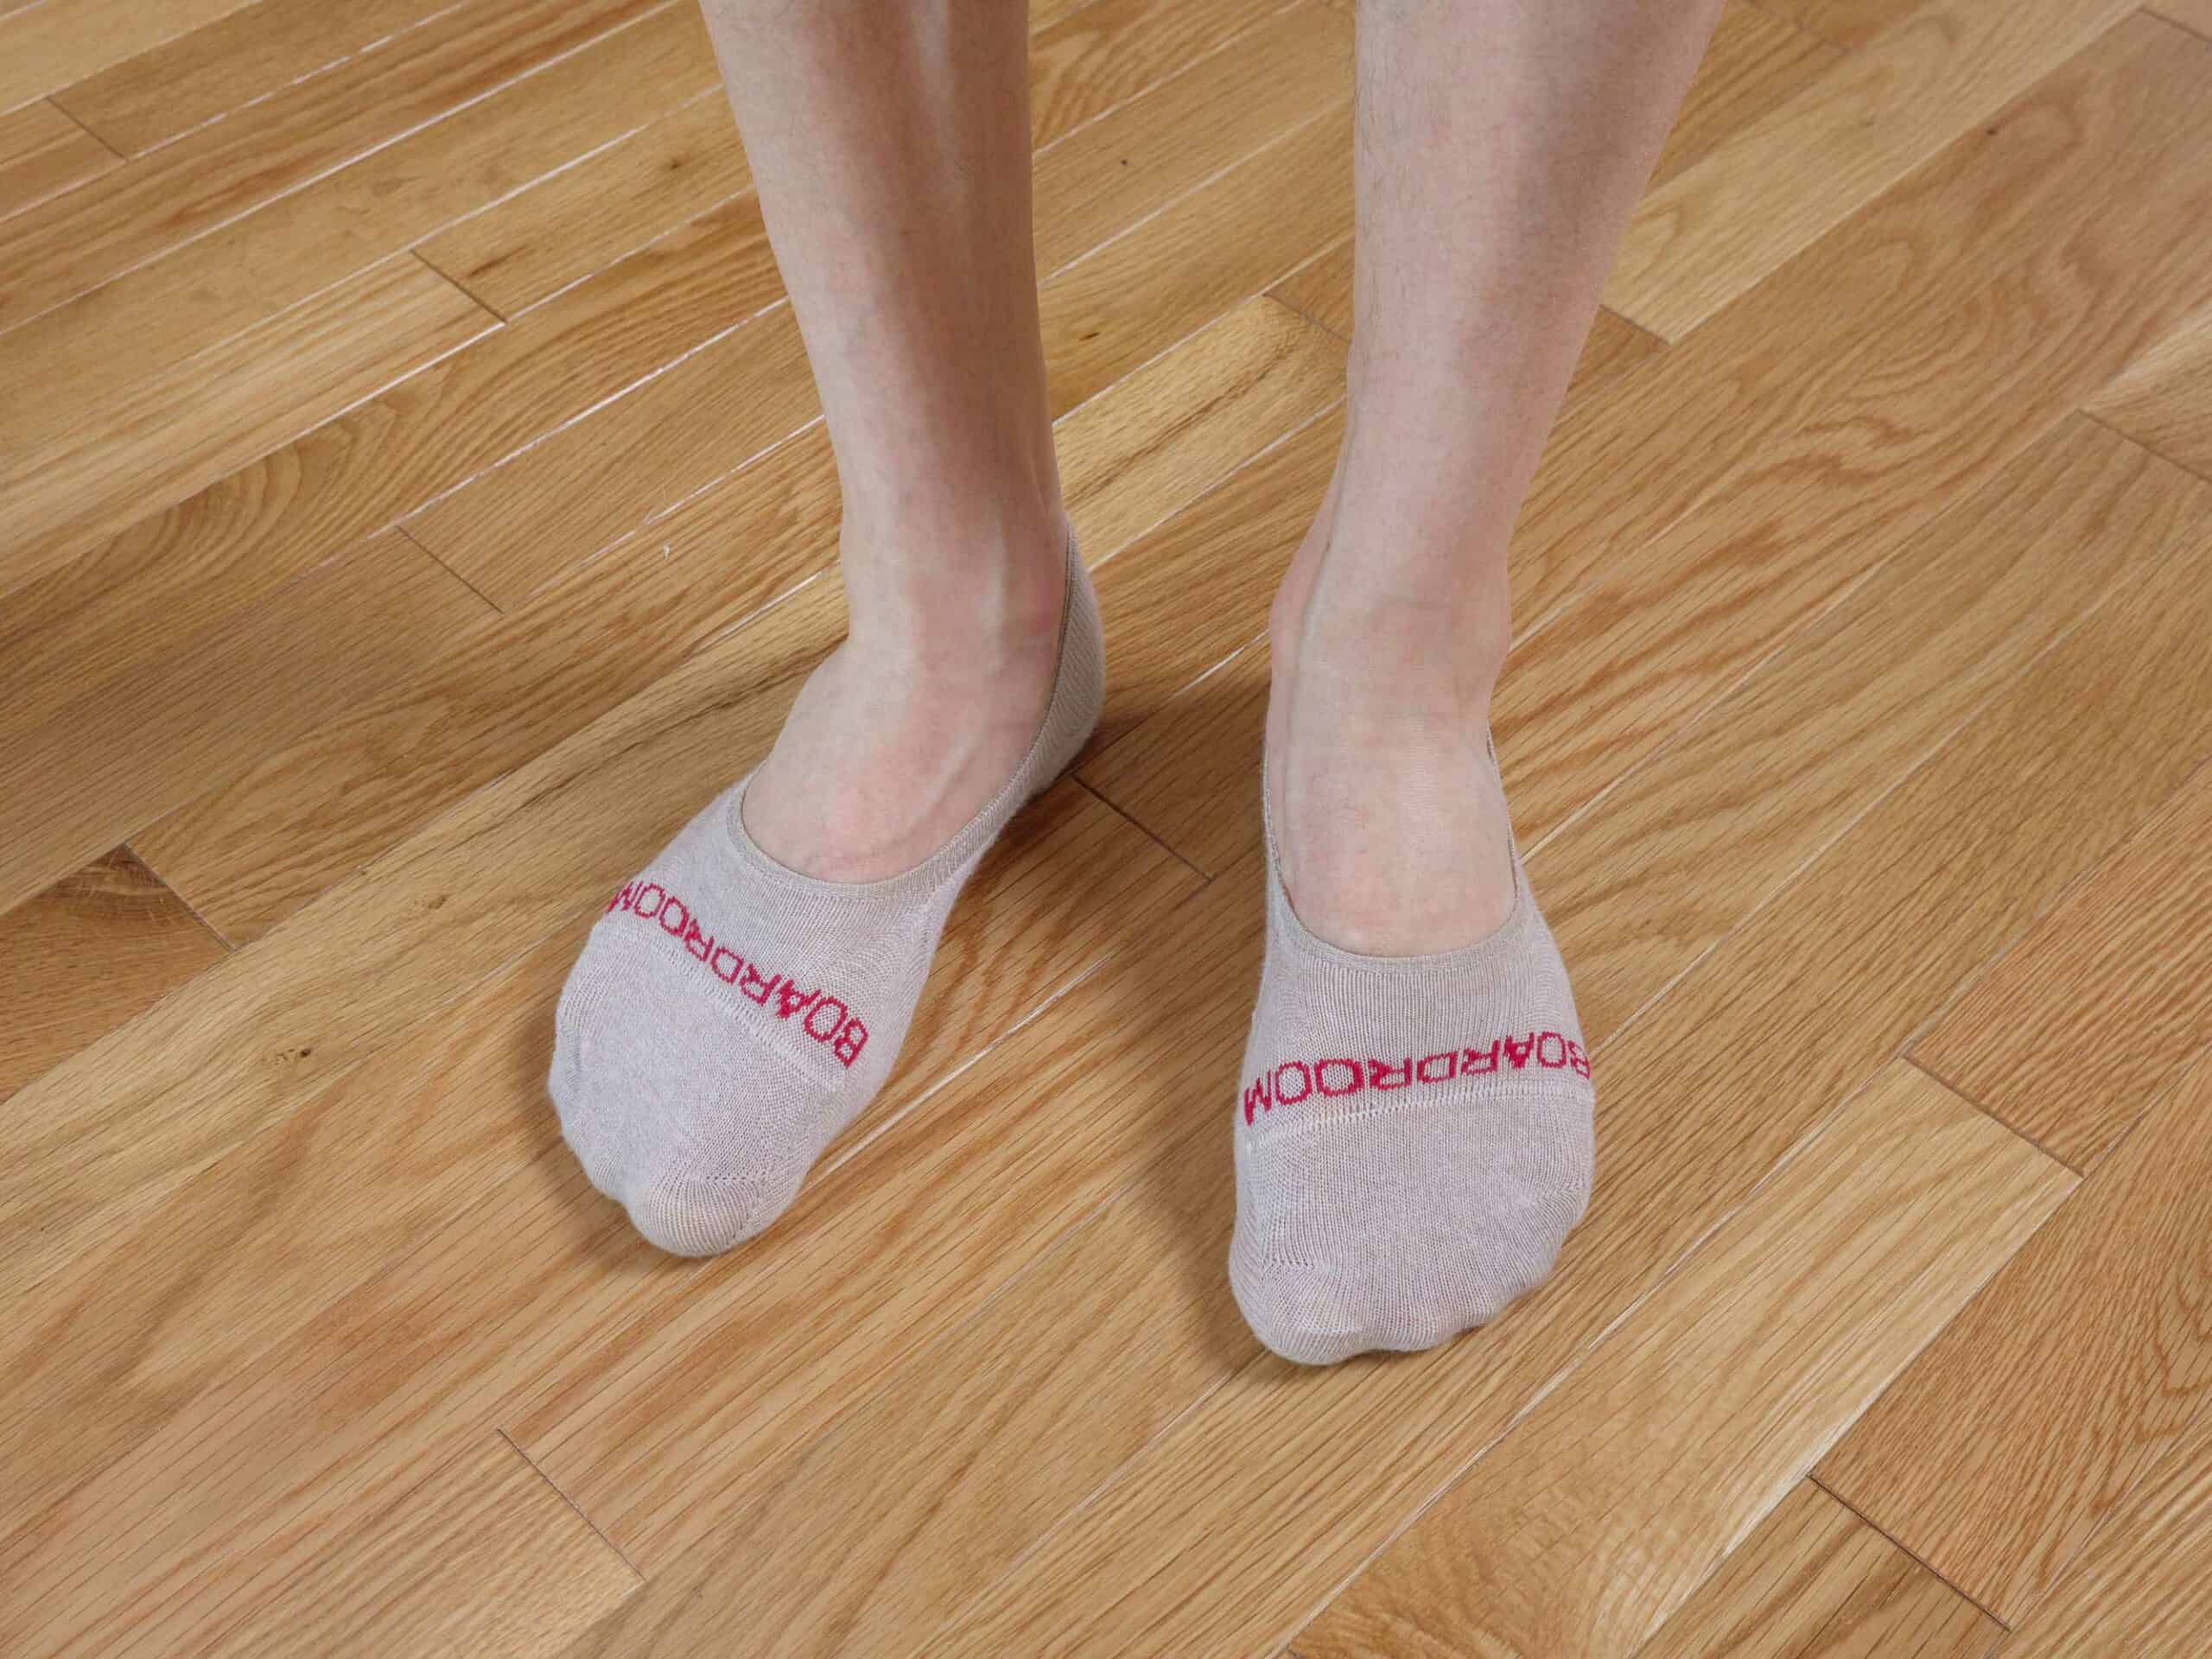 No-show socks for dress shoes